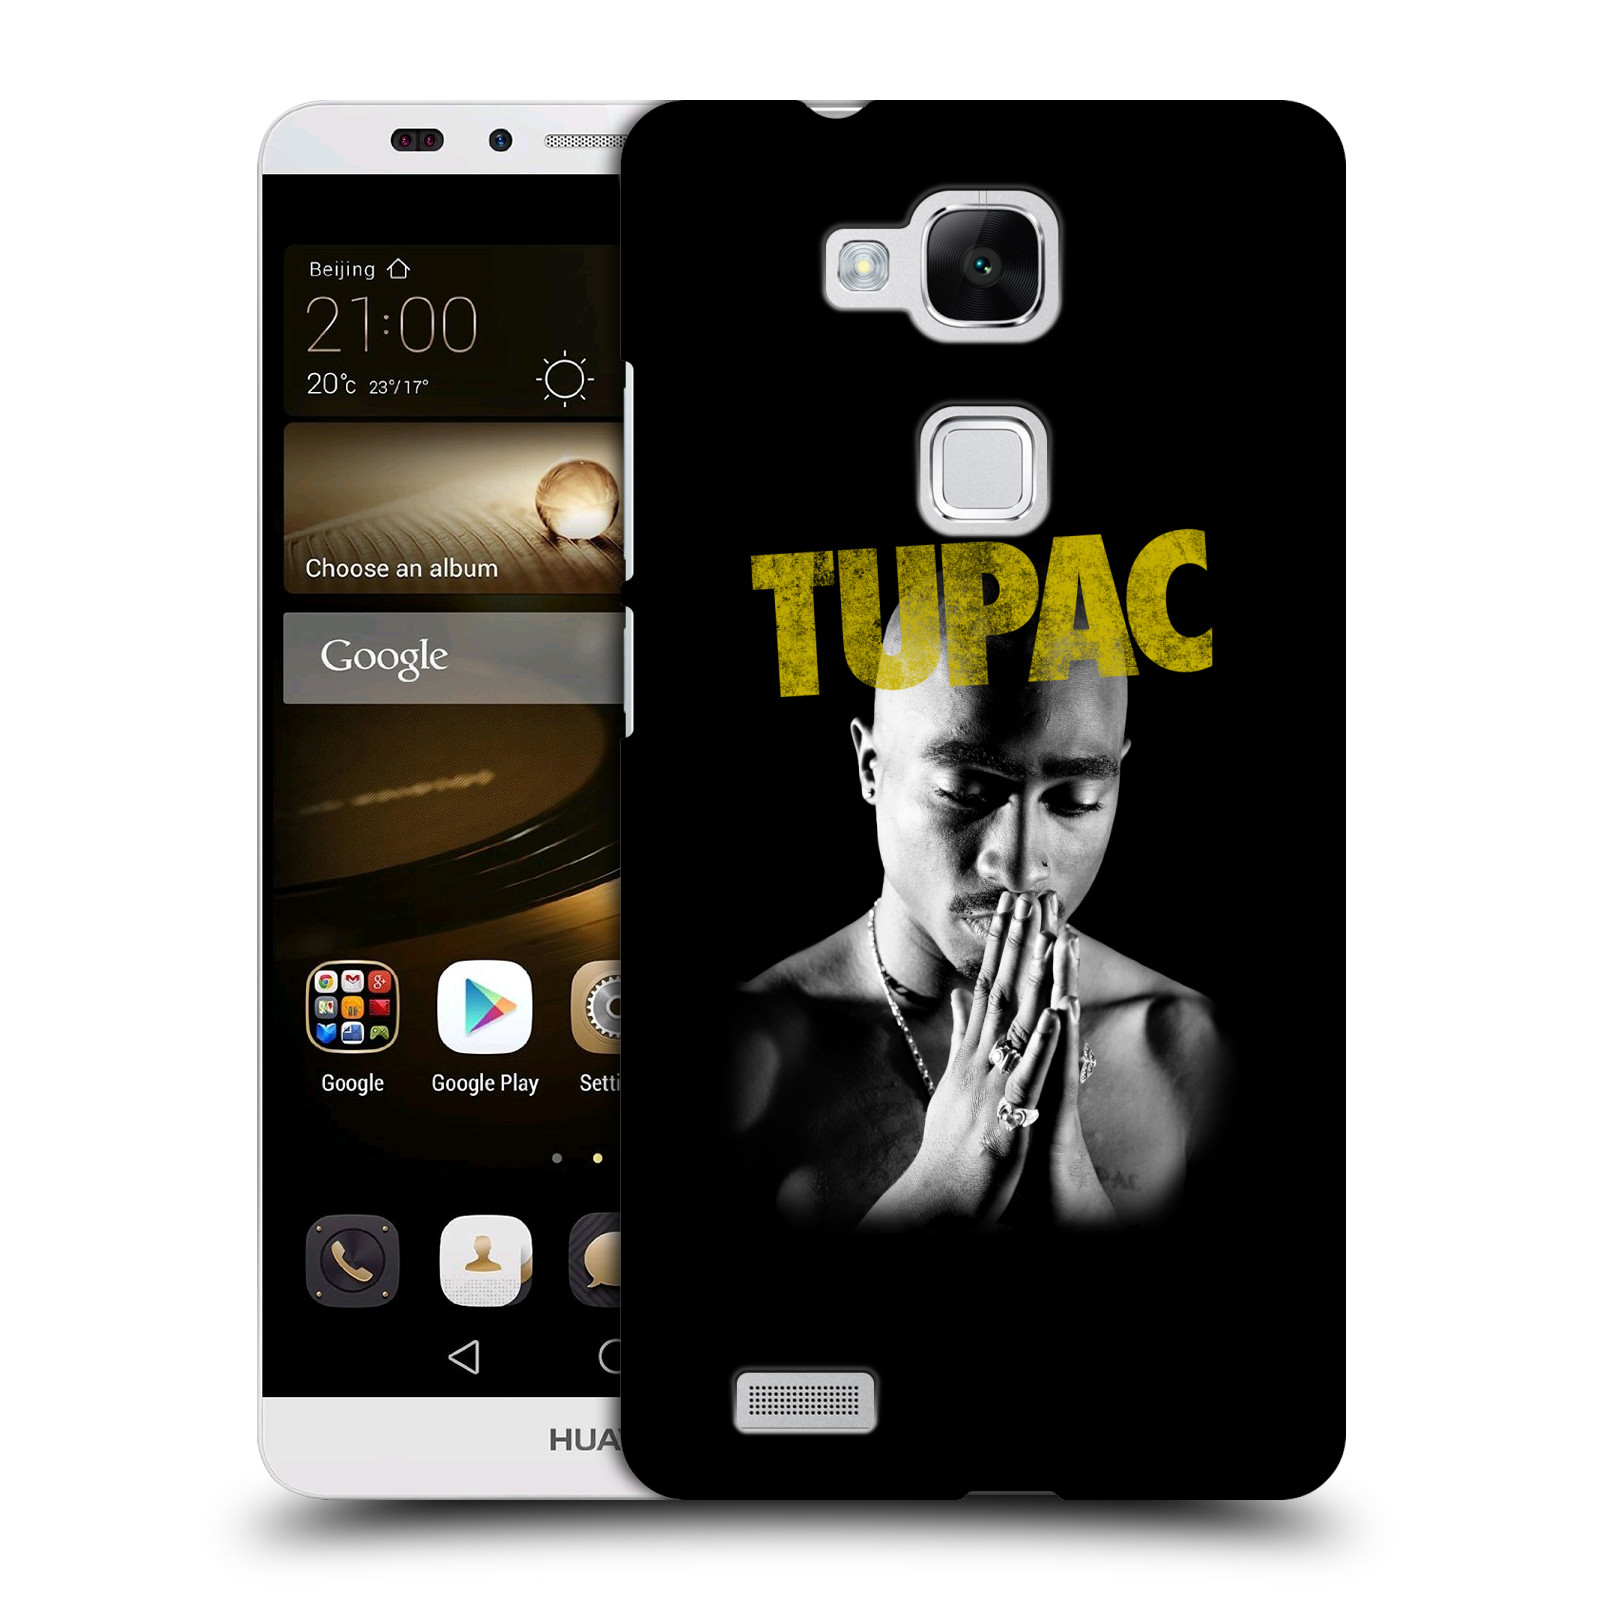 HEAD CASE plastový obal na mobil Huawei Mate 7 Zpěvák rapper Tupac Shakur 2Pac zlatý nadpis